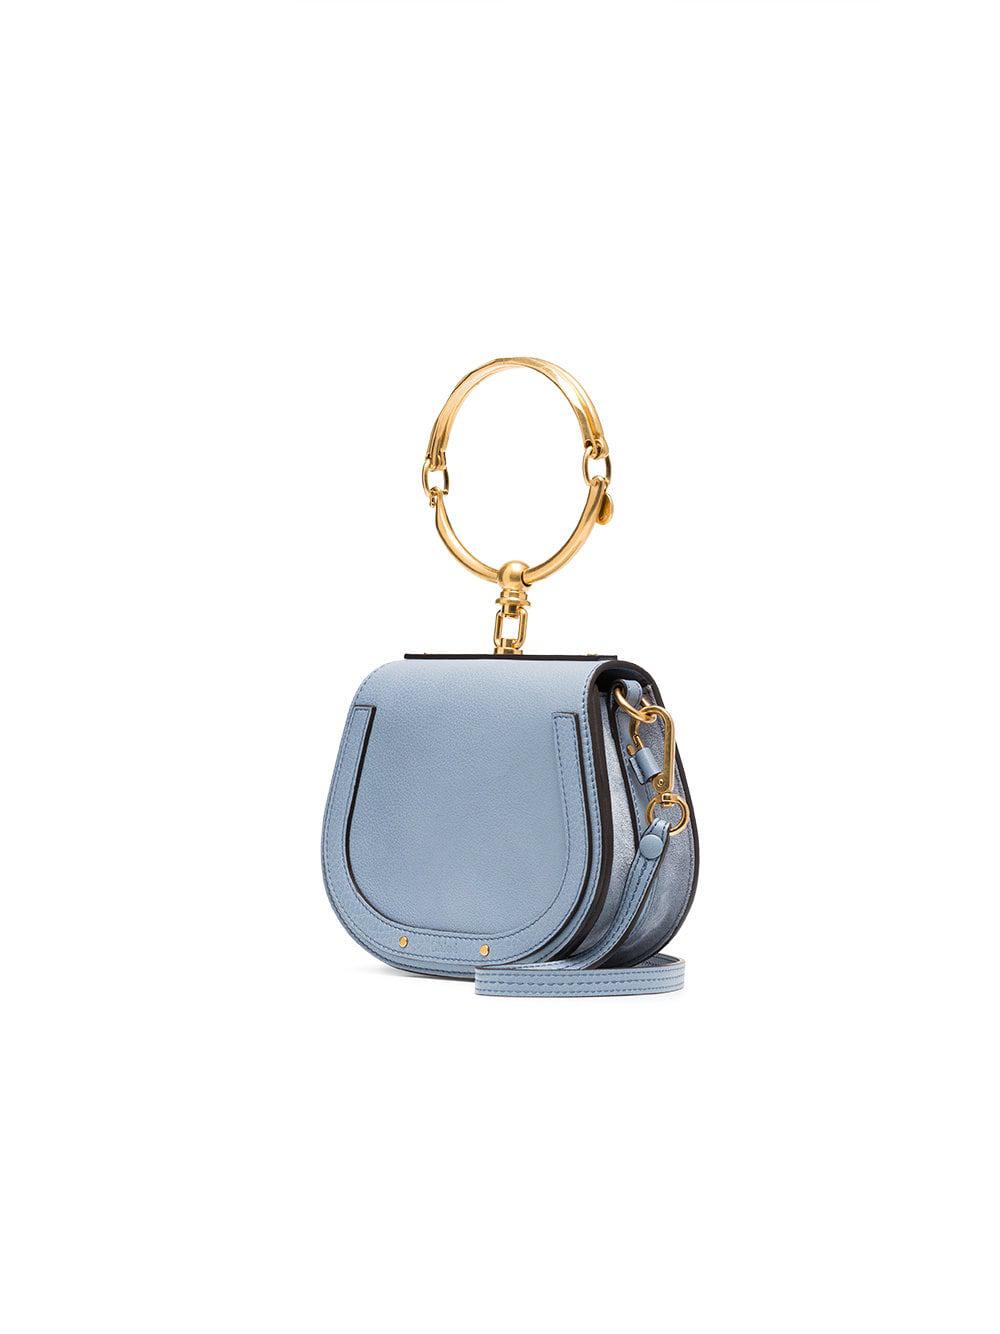 Chloé - Authenticated Bracelet Nile Handbag - Leather Camel Plain for Women, Very Good Condition